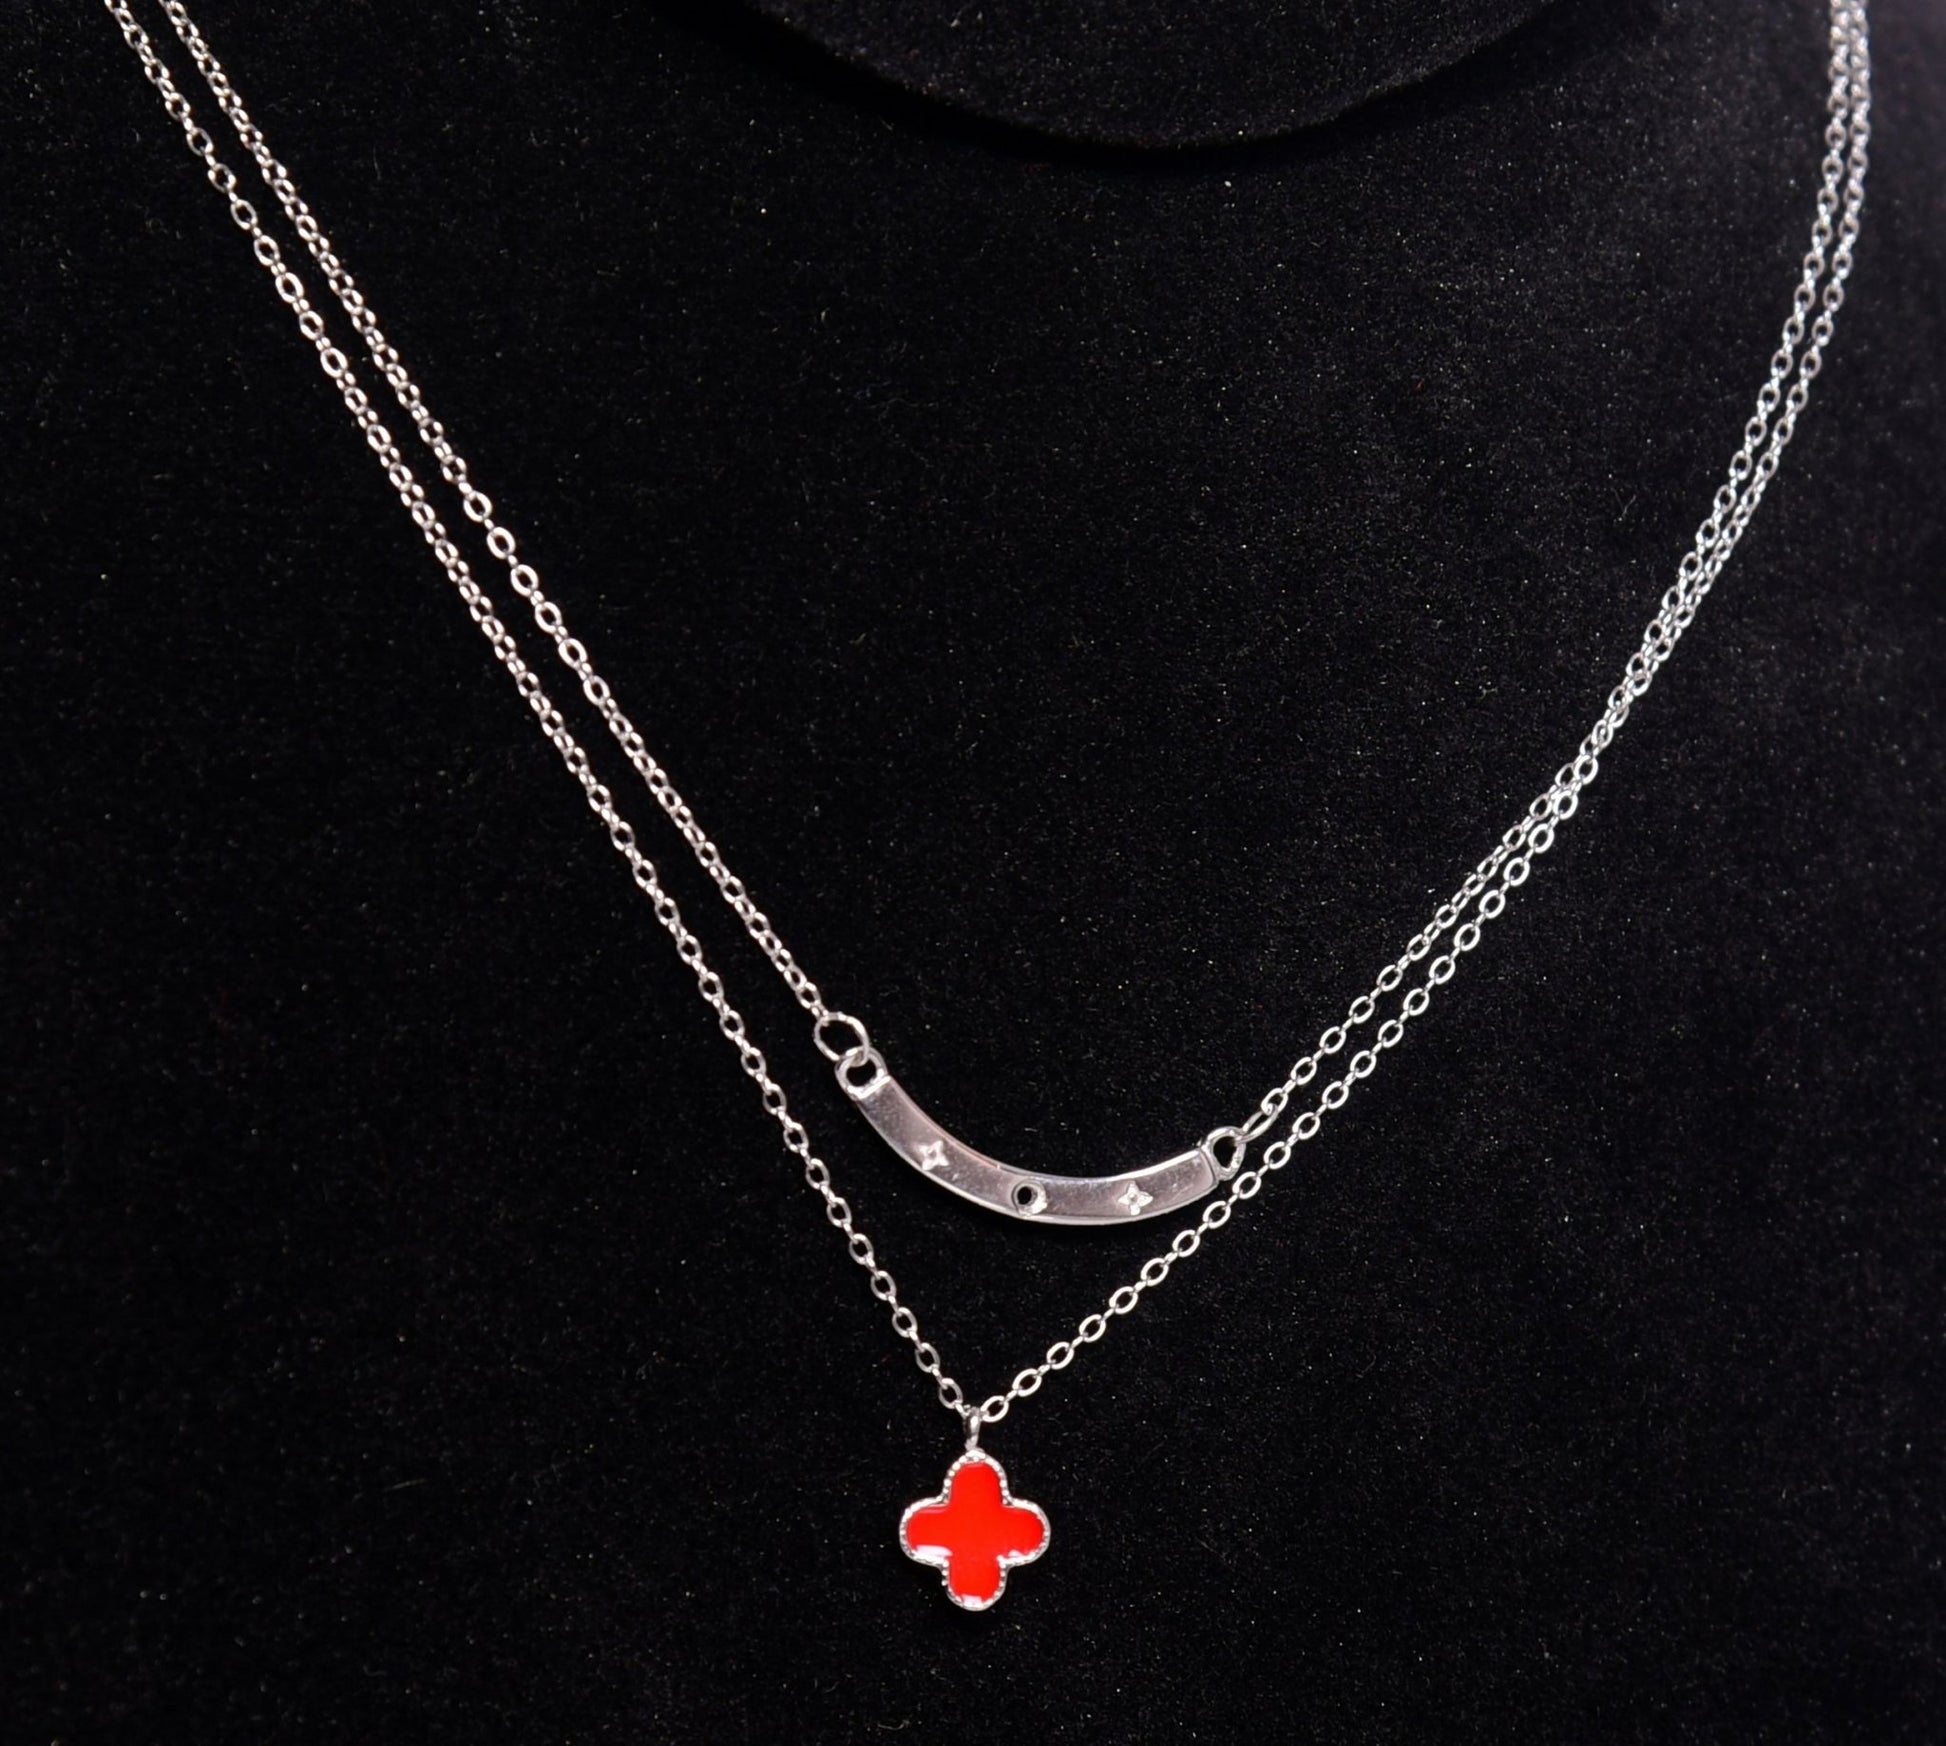 Silver Layer Chain | Red Cross Pendant | 2 Layer Women's Chain | 925 Premium Silver - Indique